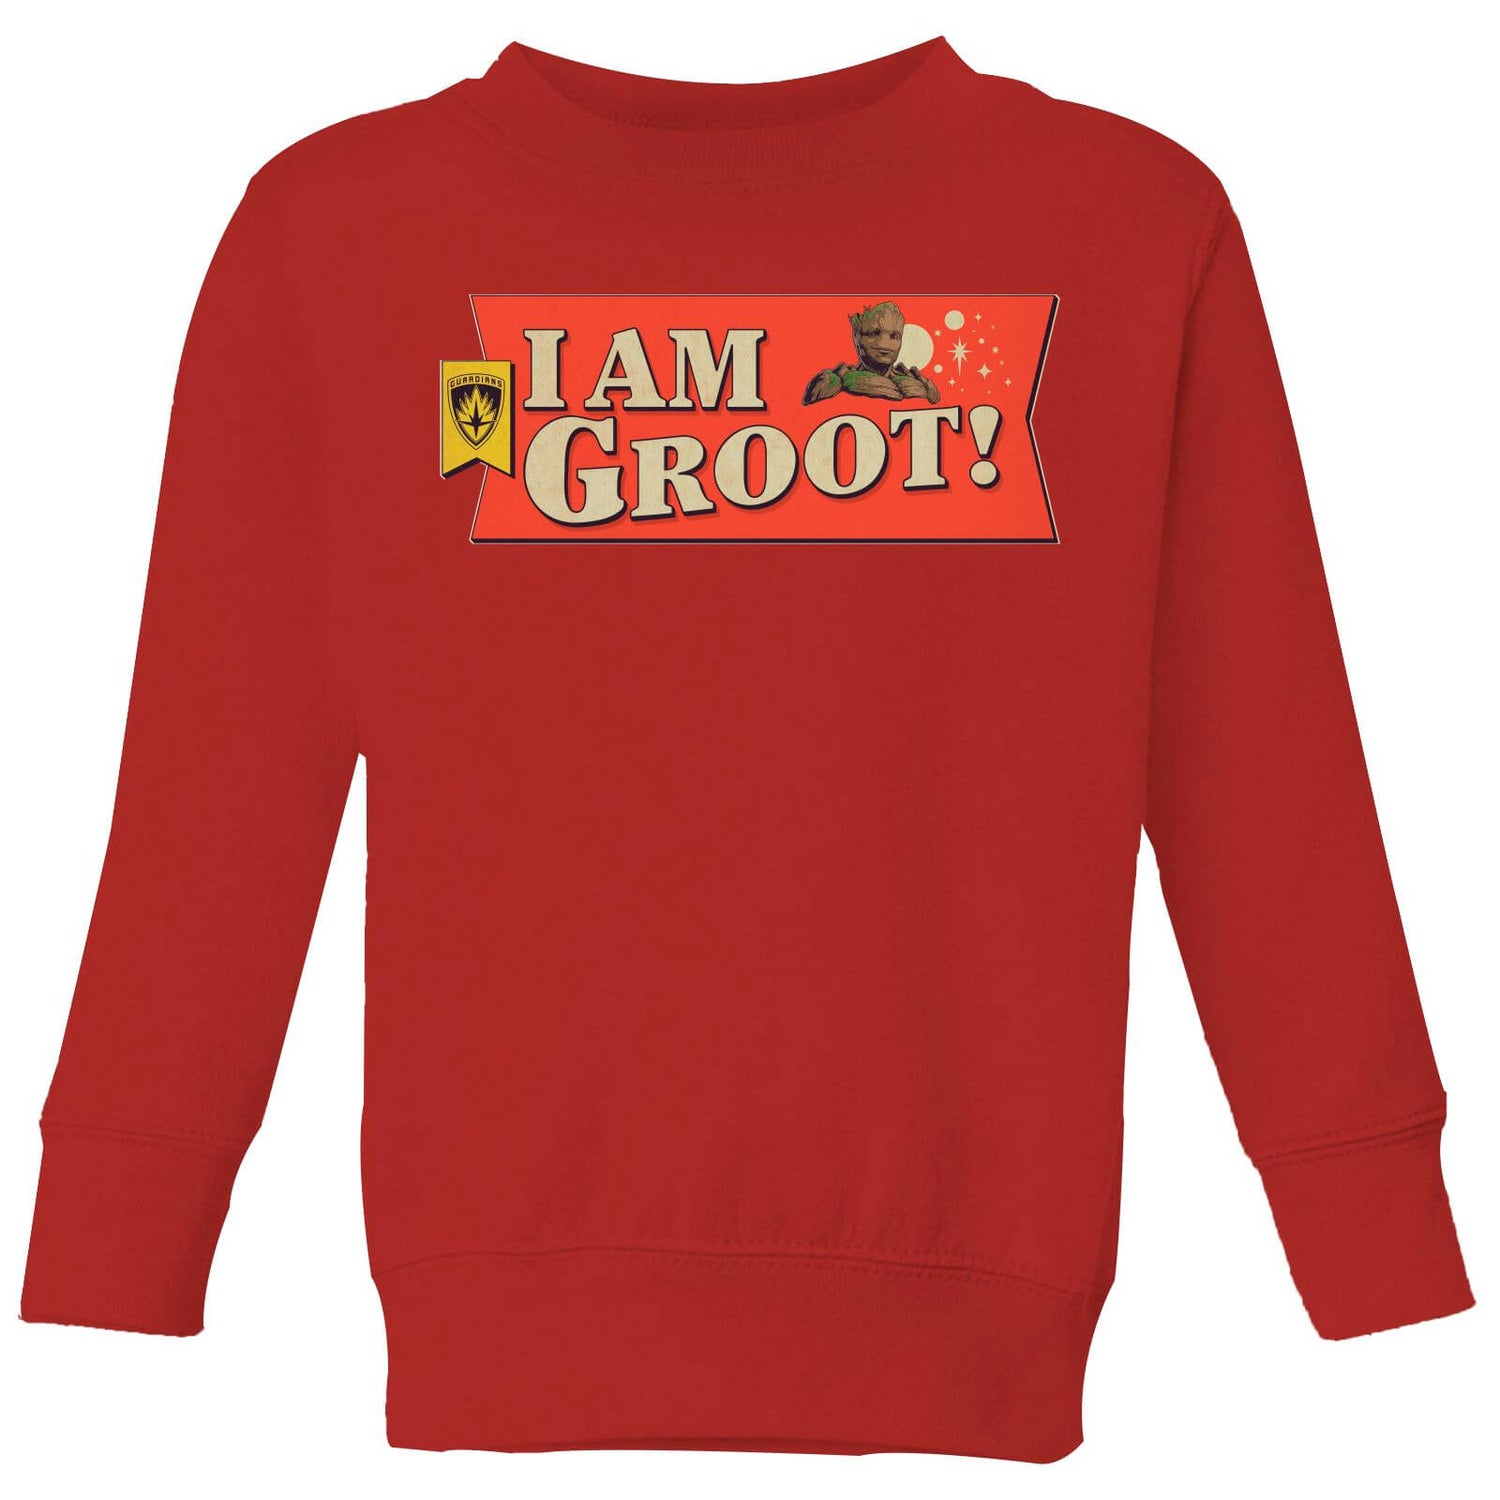 Guardians of the Galaxy I Am Groot! Kids' Sweatshirt - Red